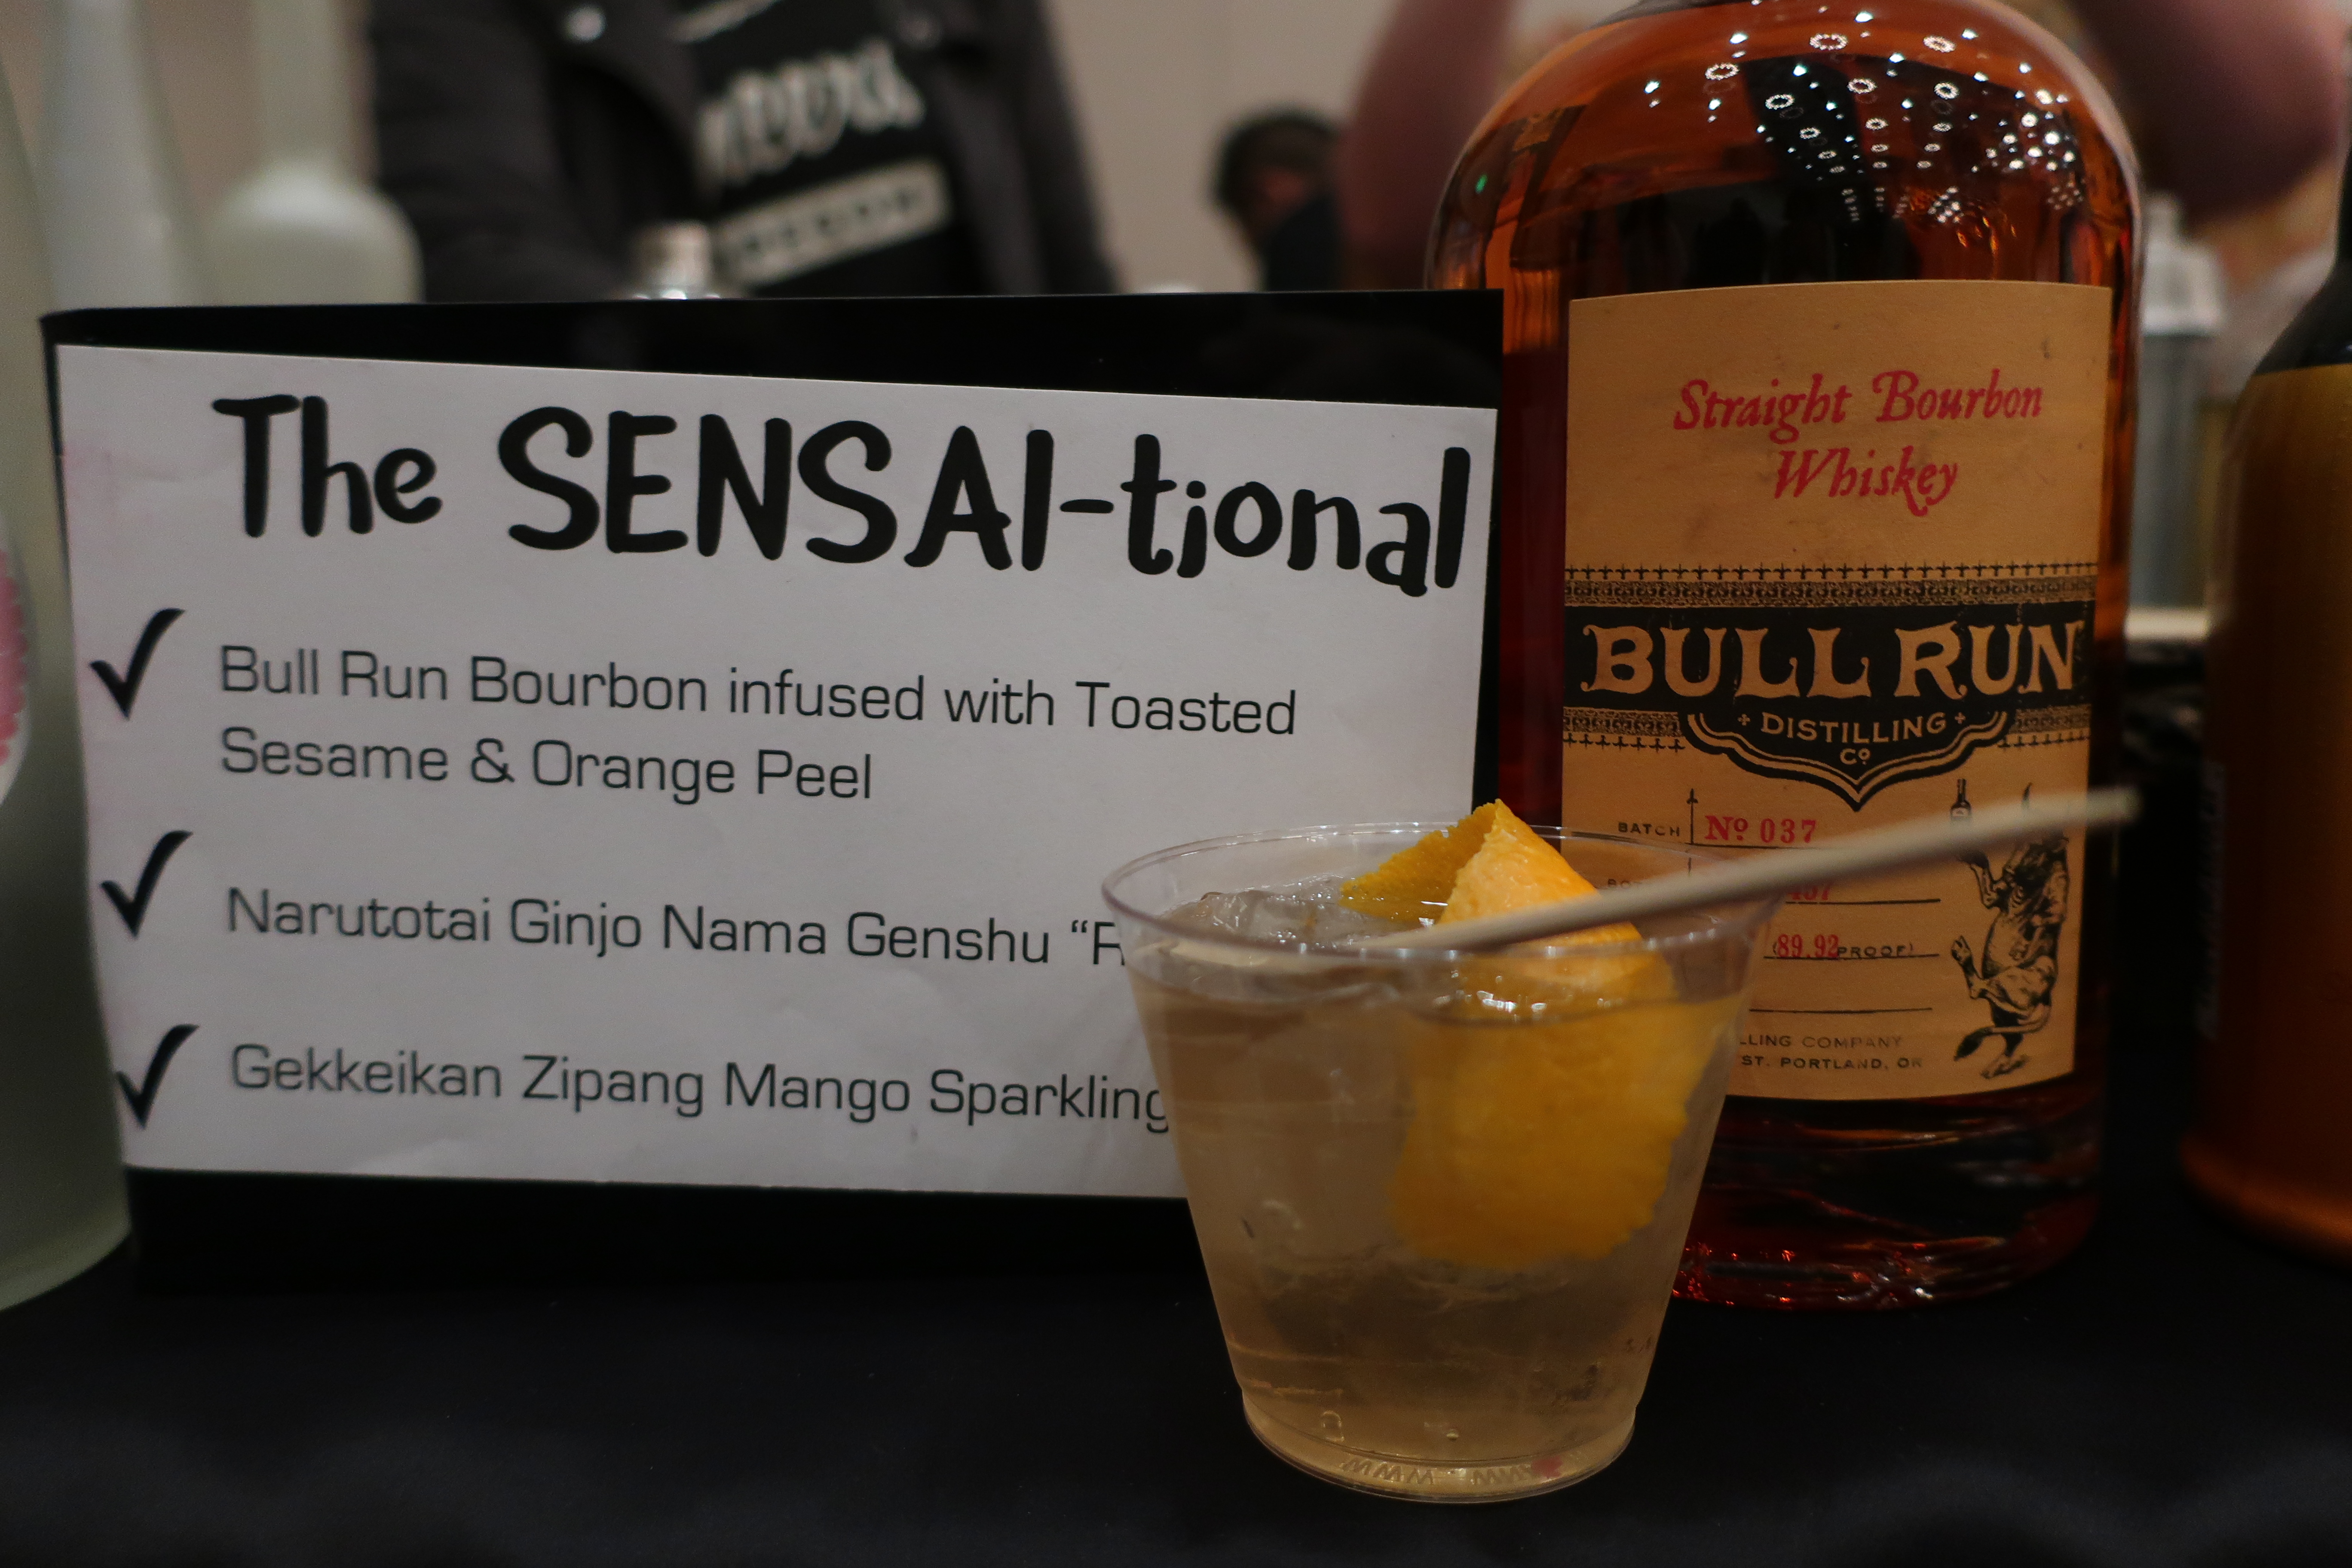 The SENSAI-tional sake cocktail made with Bull Run Bourbon at Saké Fest PDX.